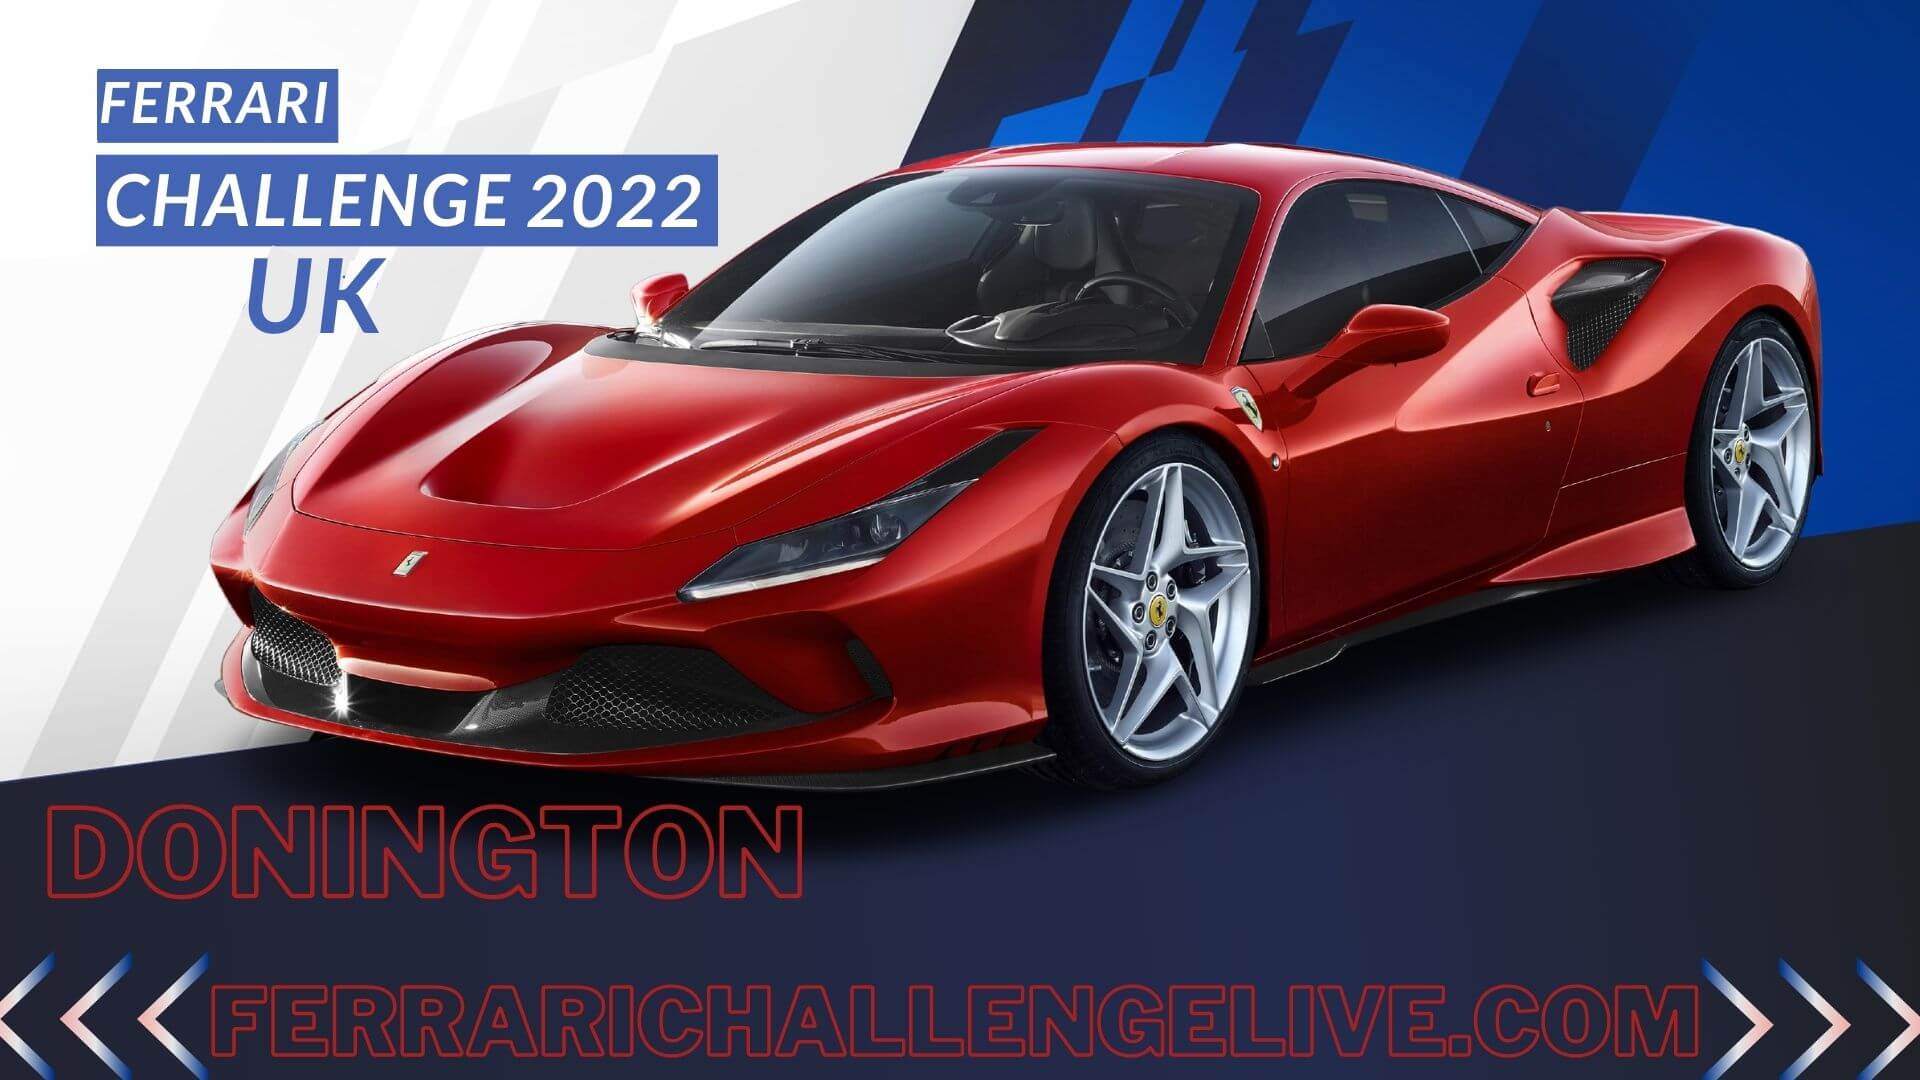 Donington Ferrari Challenge Live Stream